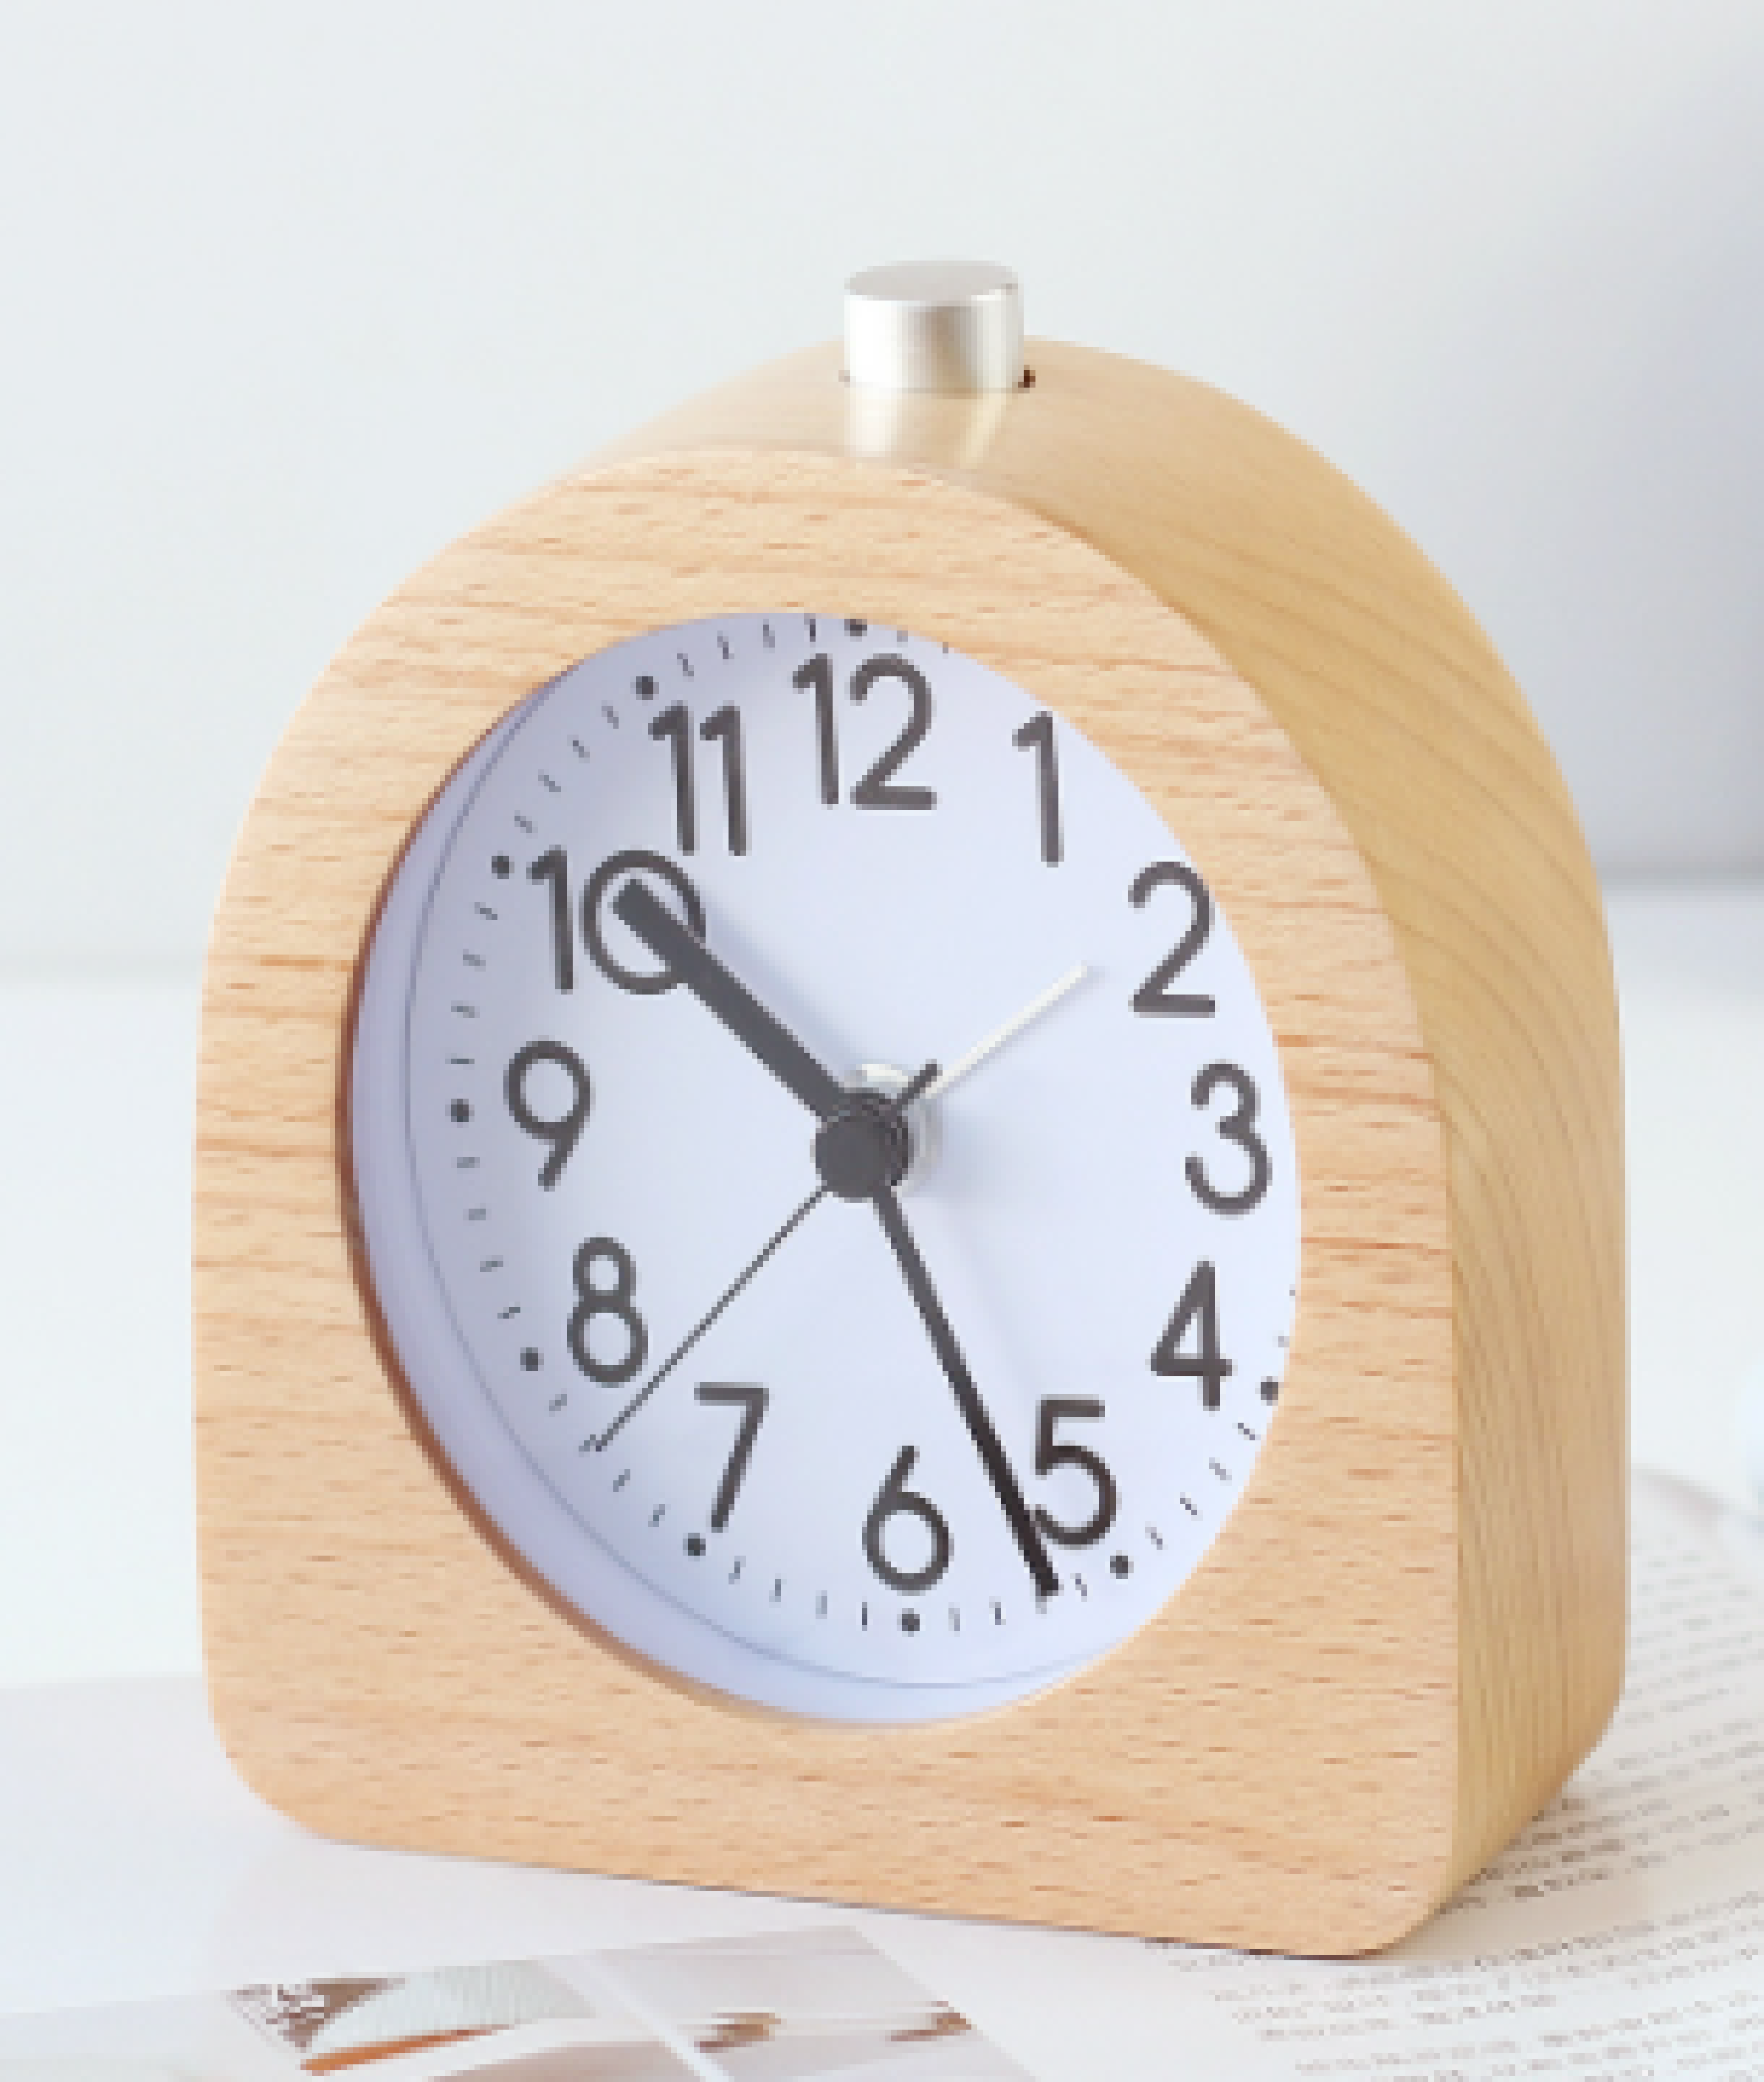 Arc-shaped solid wood clock, student sleepiness, lazy alarm clock